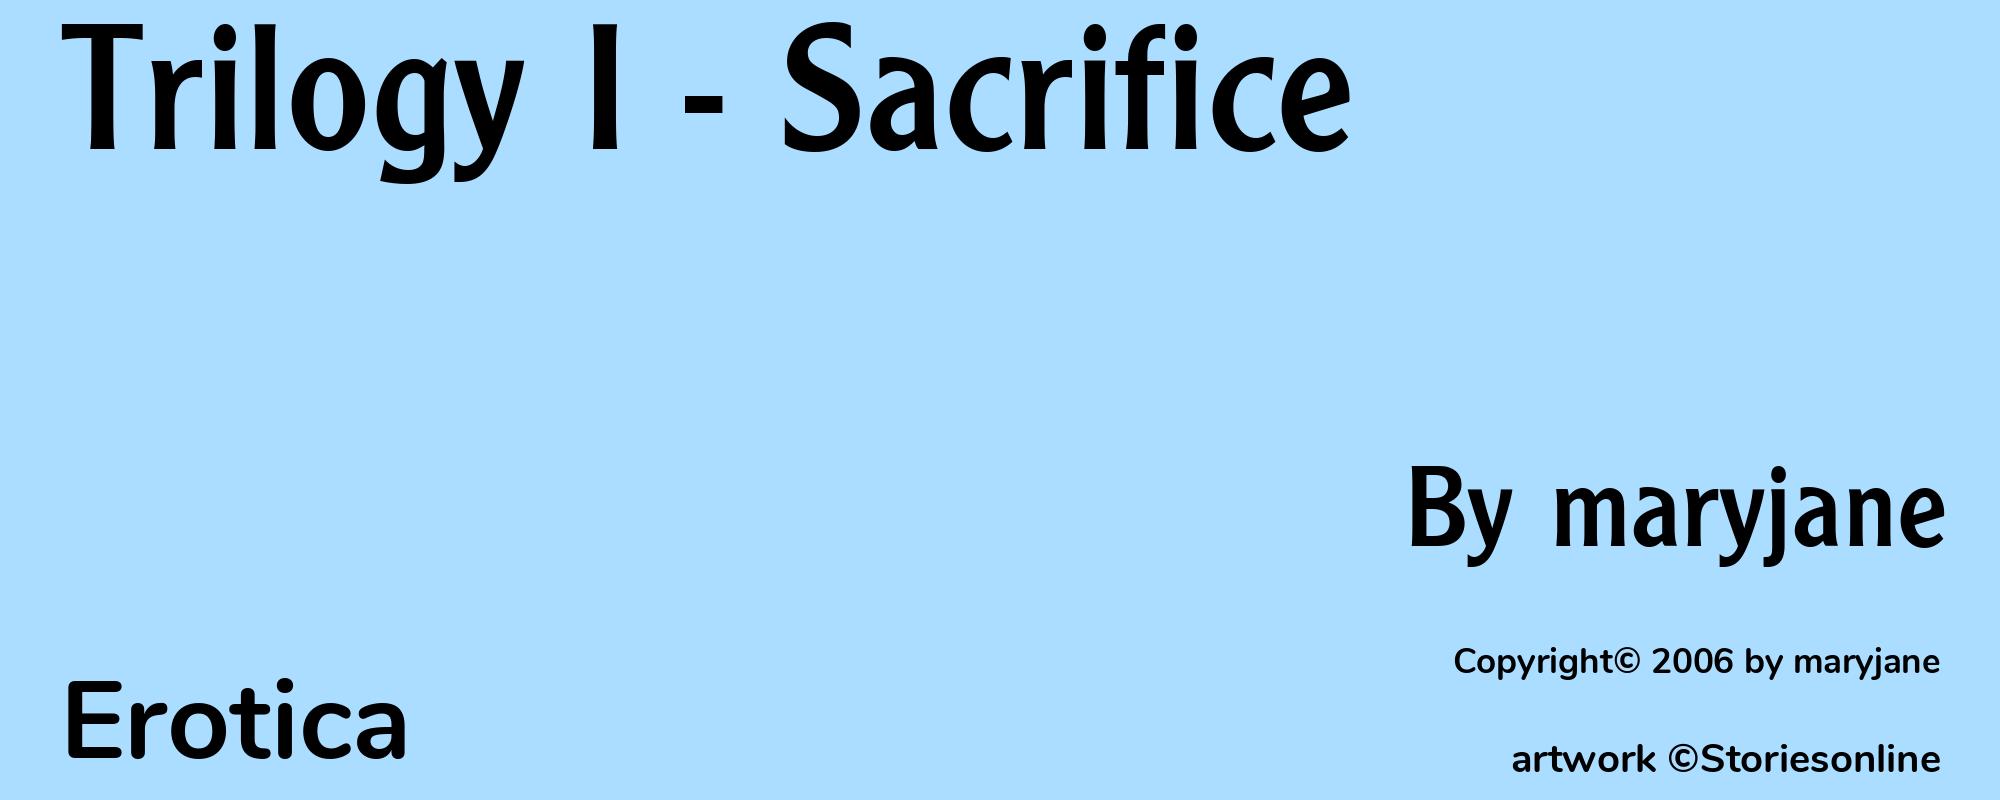 Trilogy I - Sacrifice - Cover